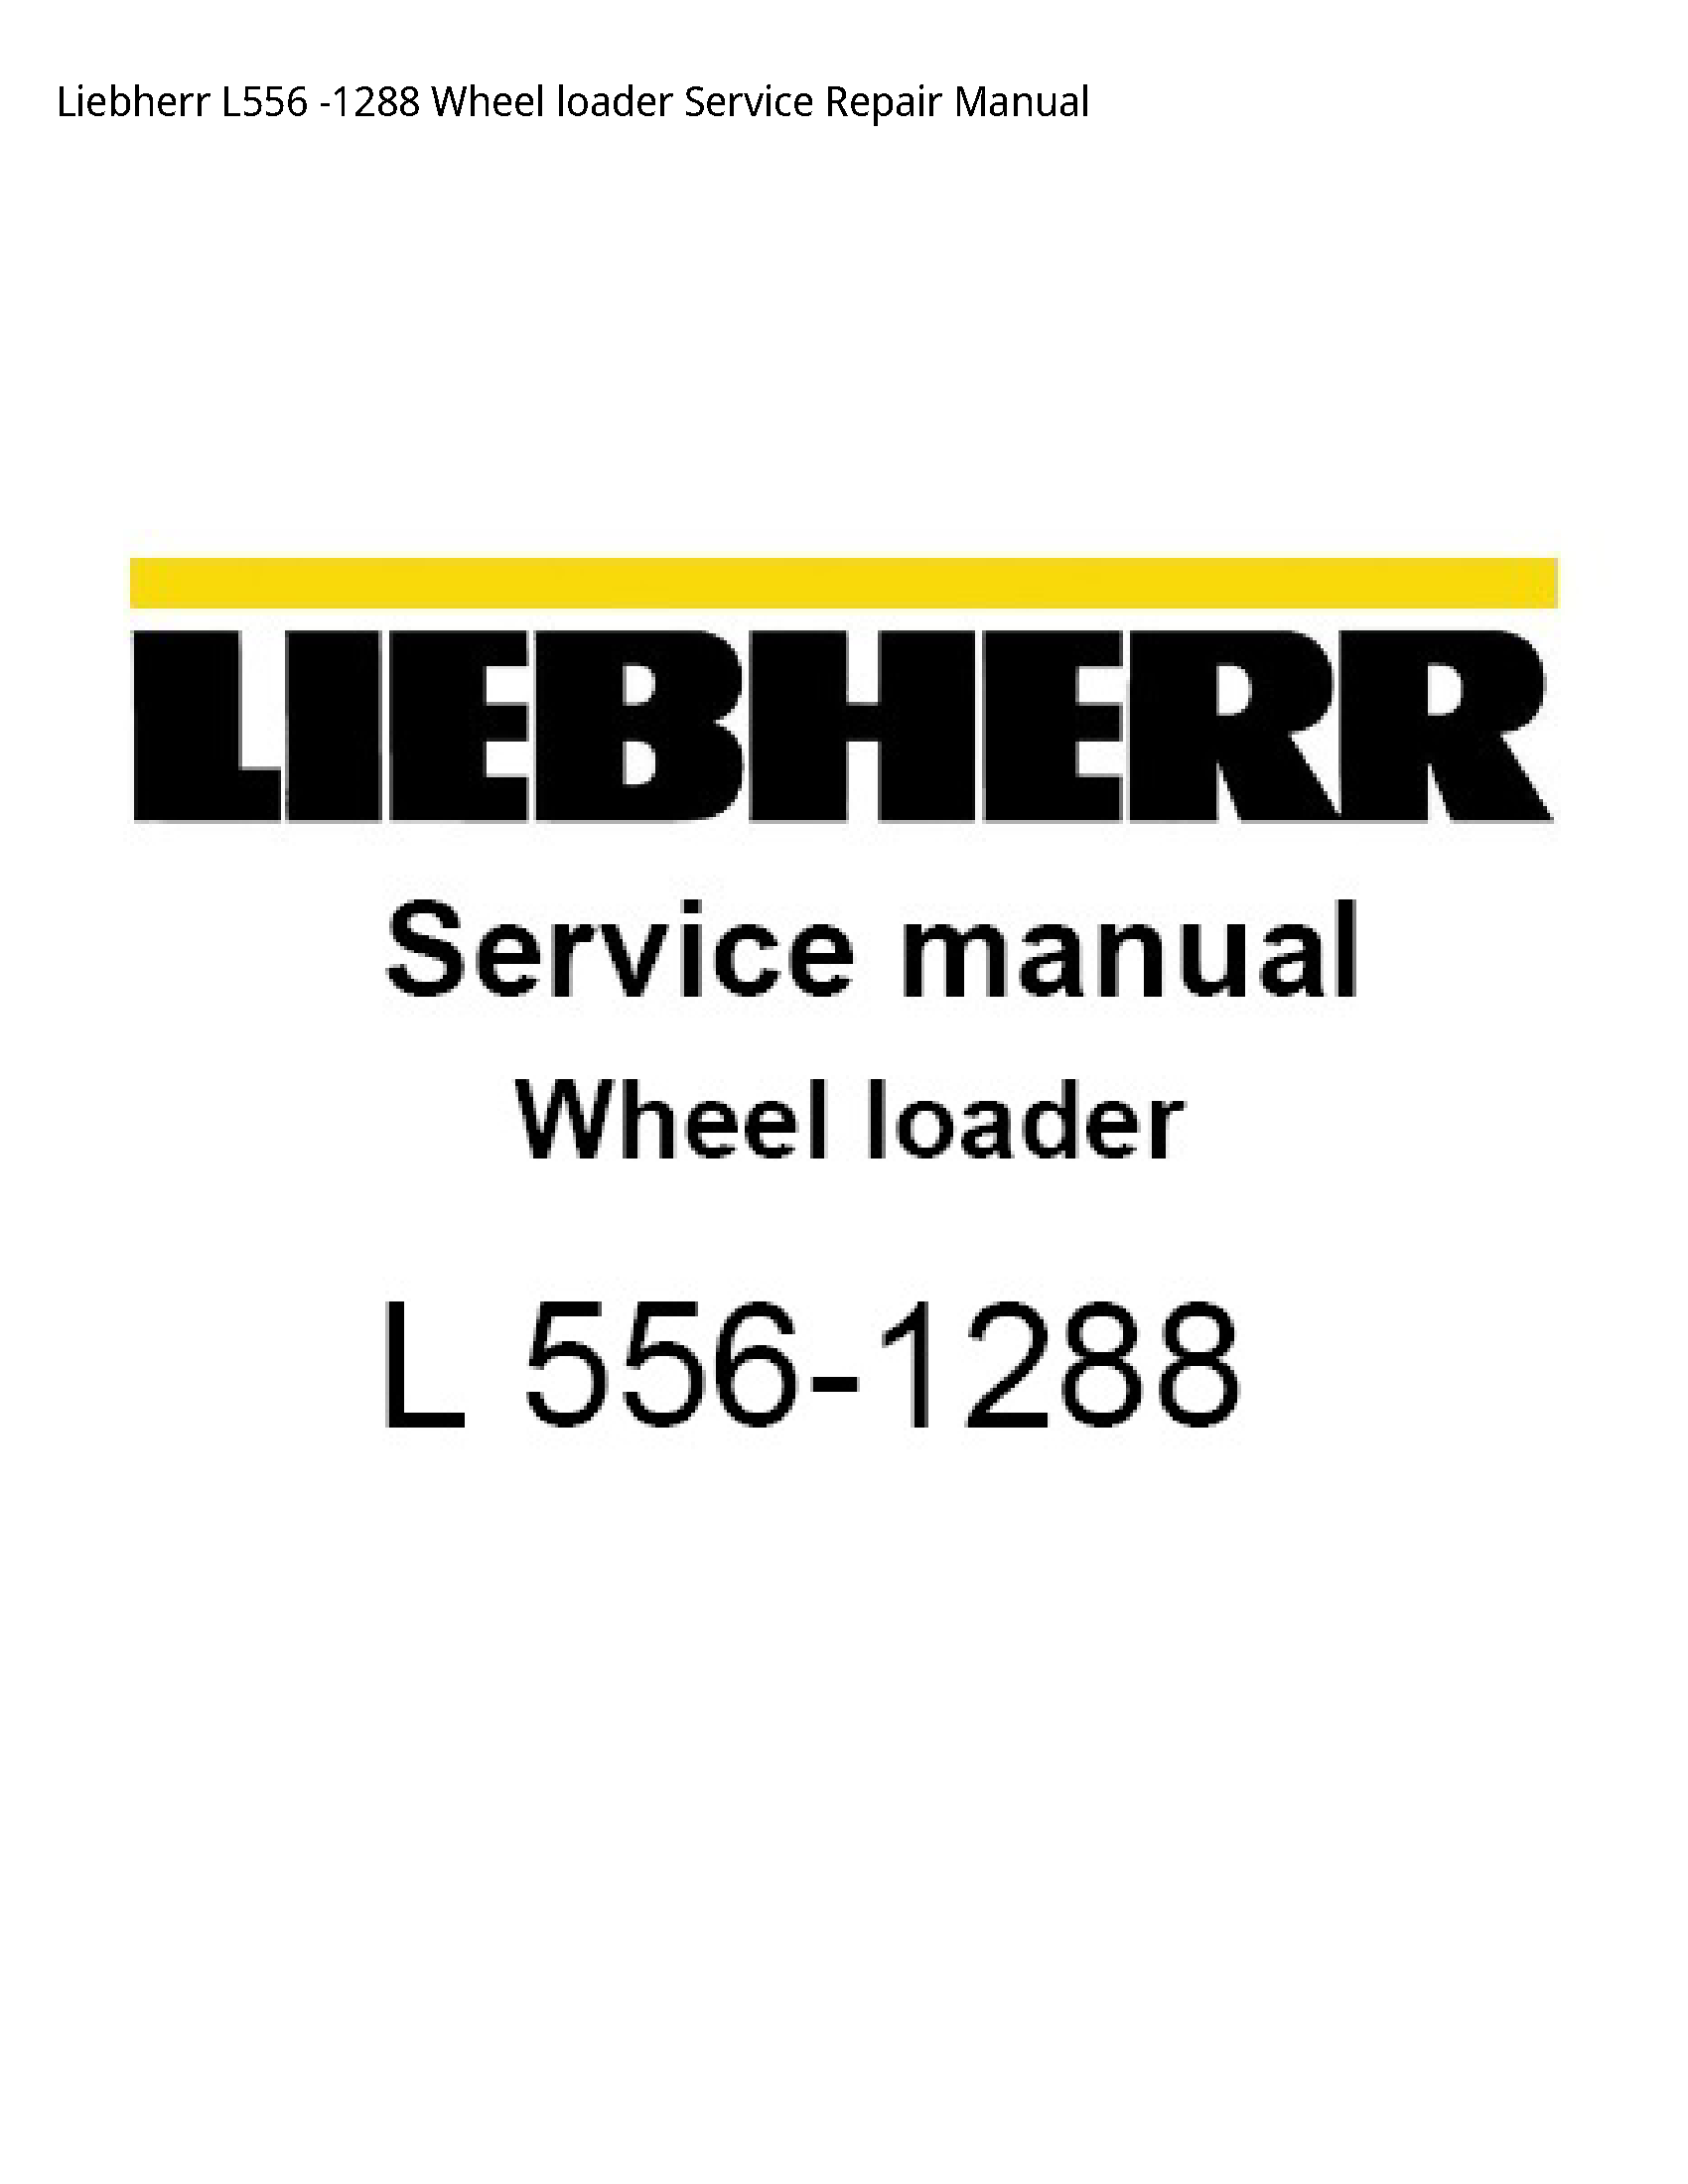 Liebherr L556 Wheel loader manual